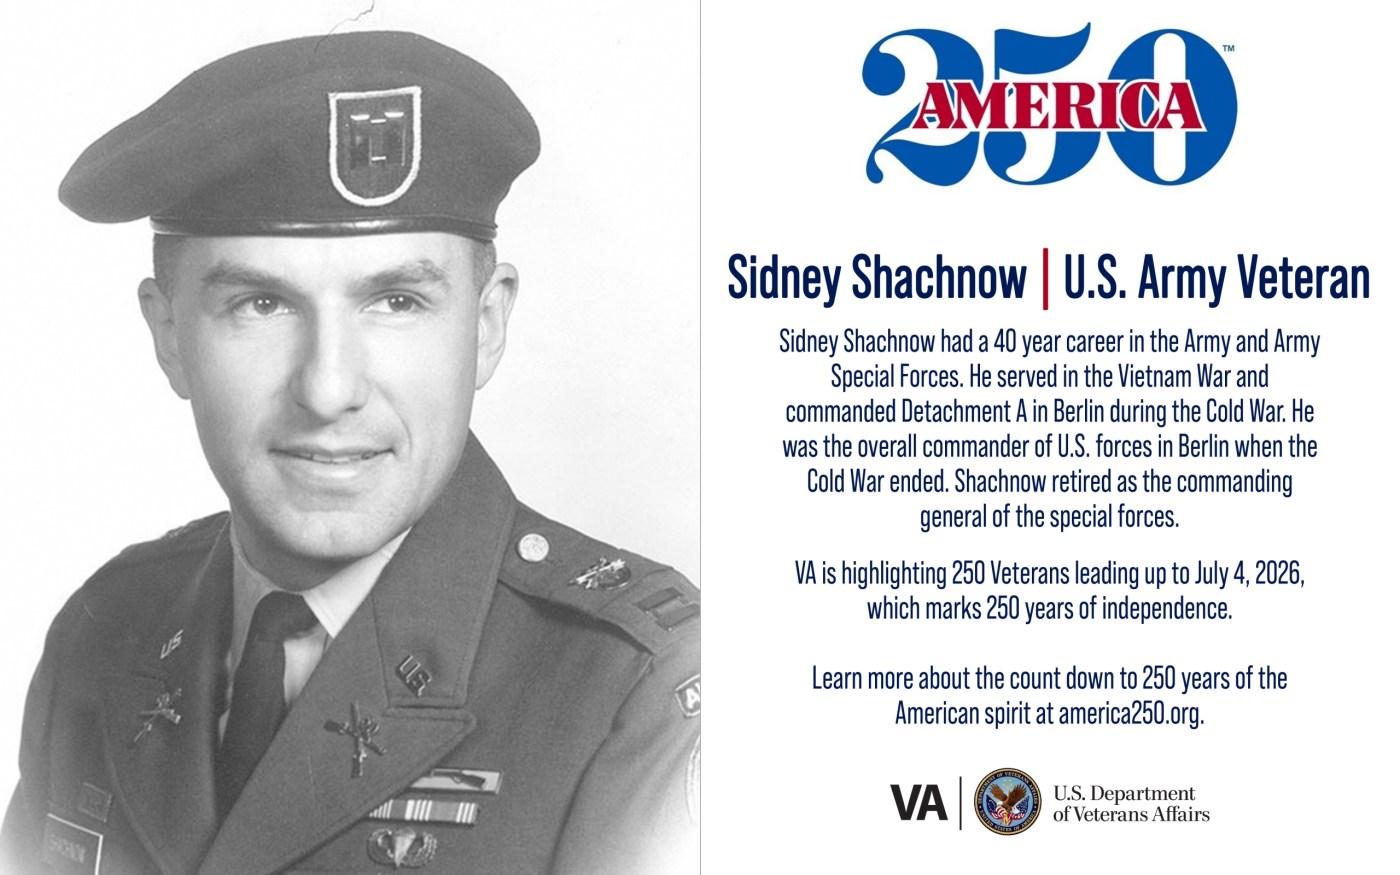 America250: Army Veteran Sidney Shachnow